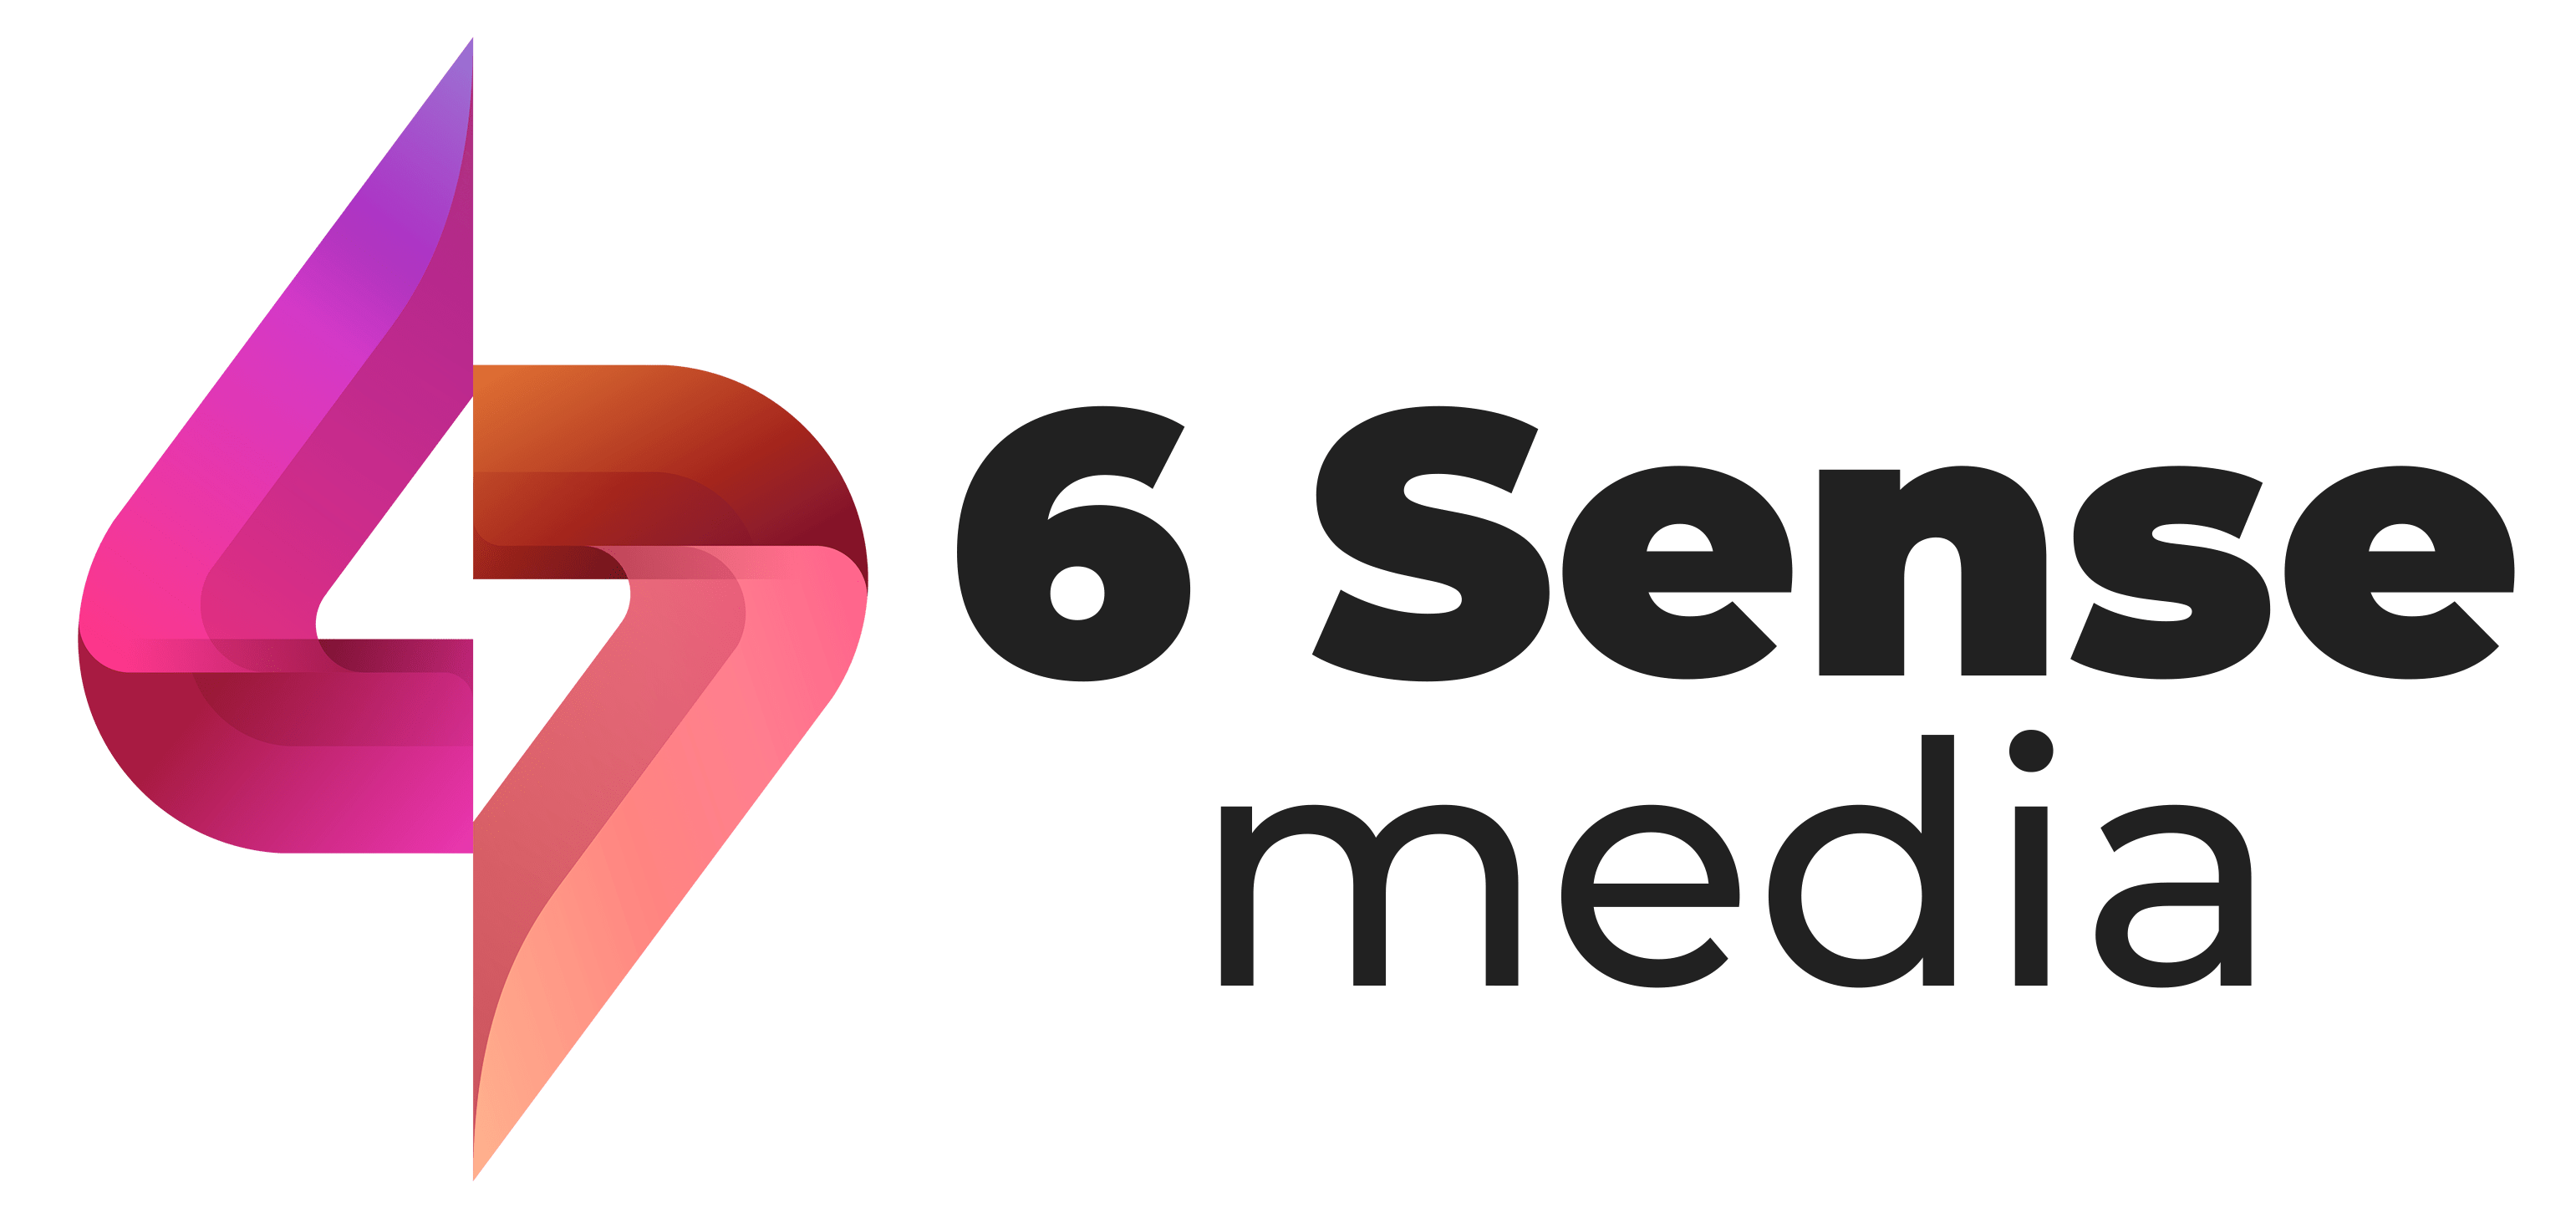 6 Sense Media logo